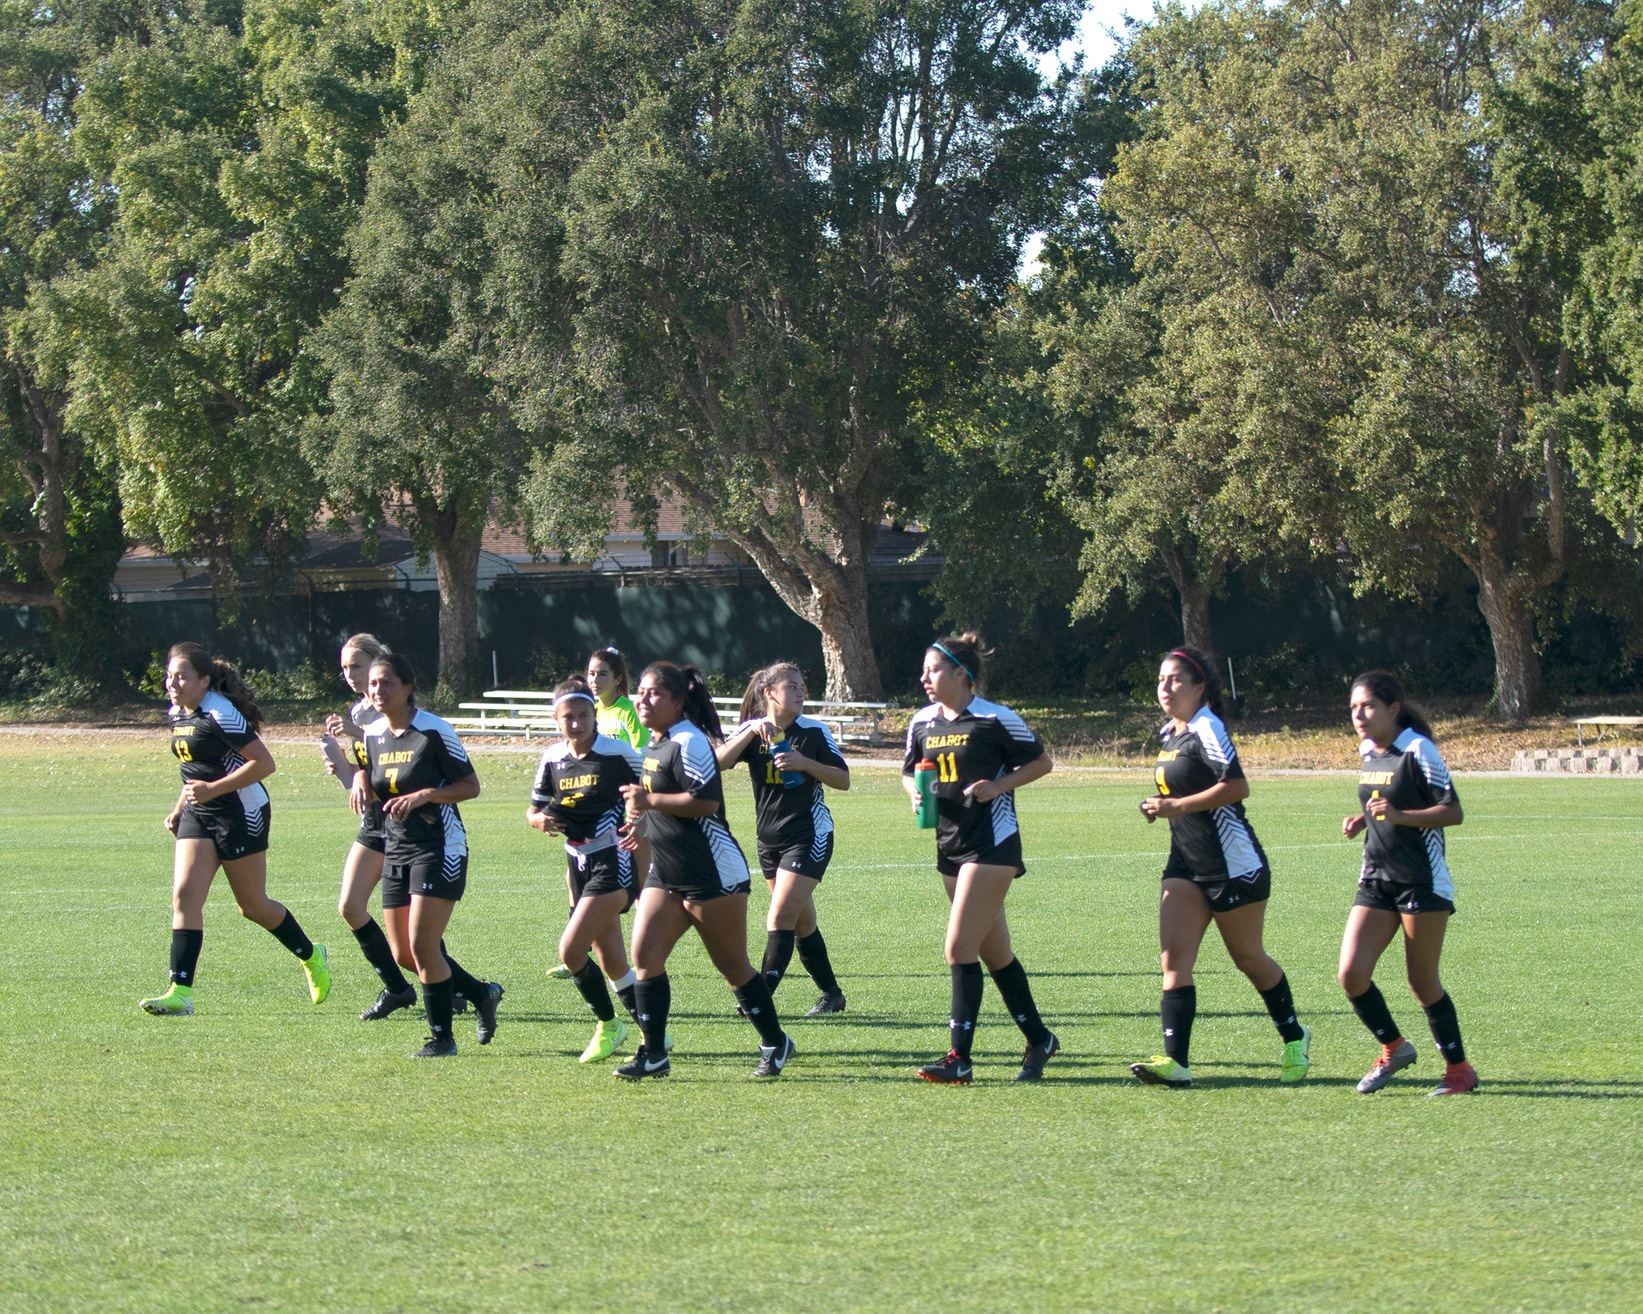 2019 Chabot College Women's Soccer team